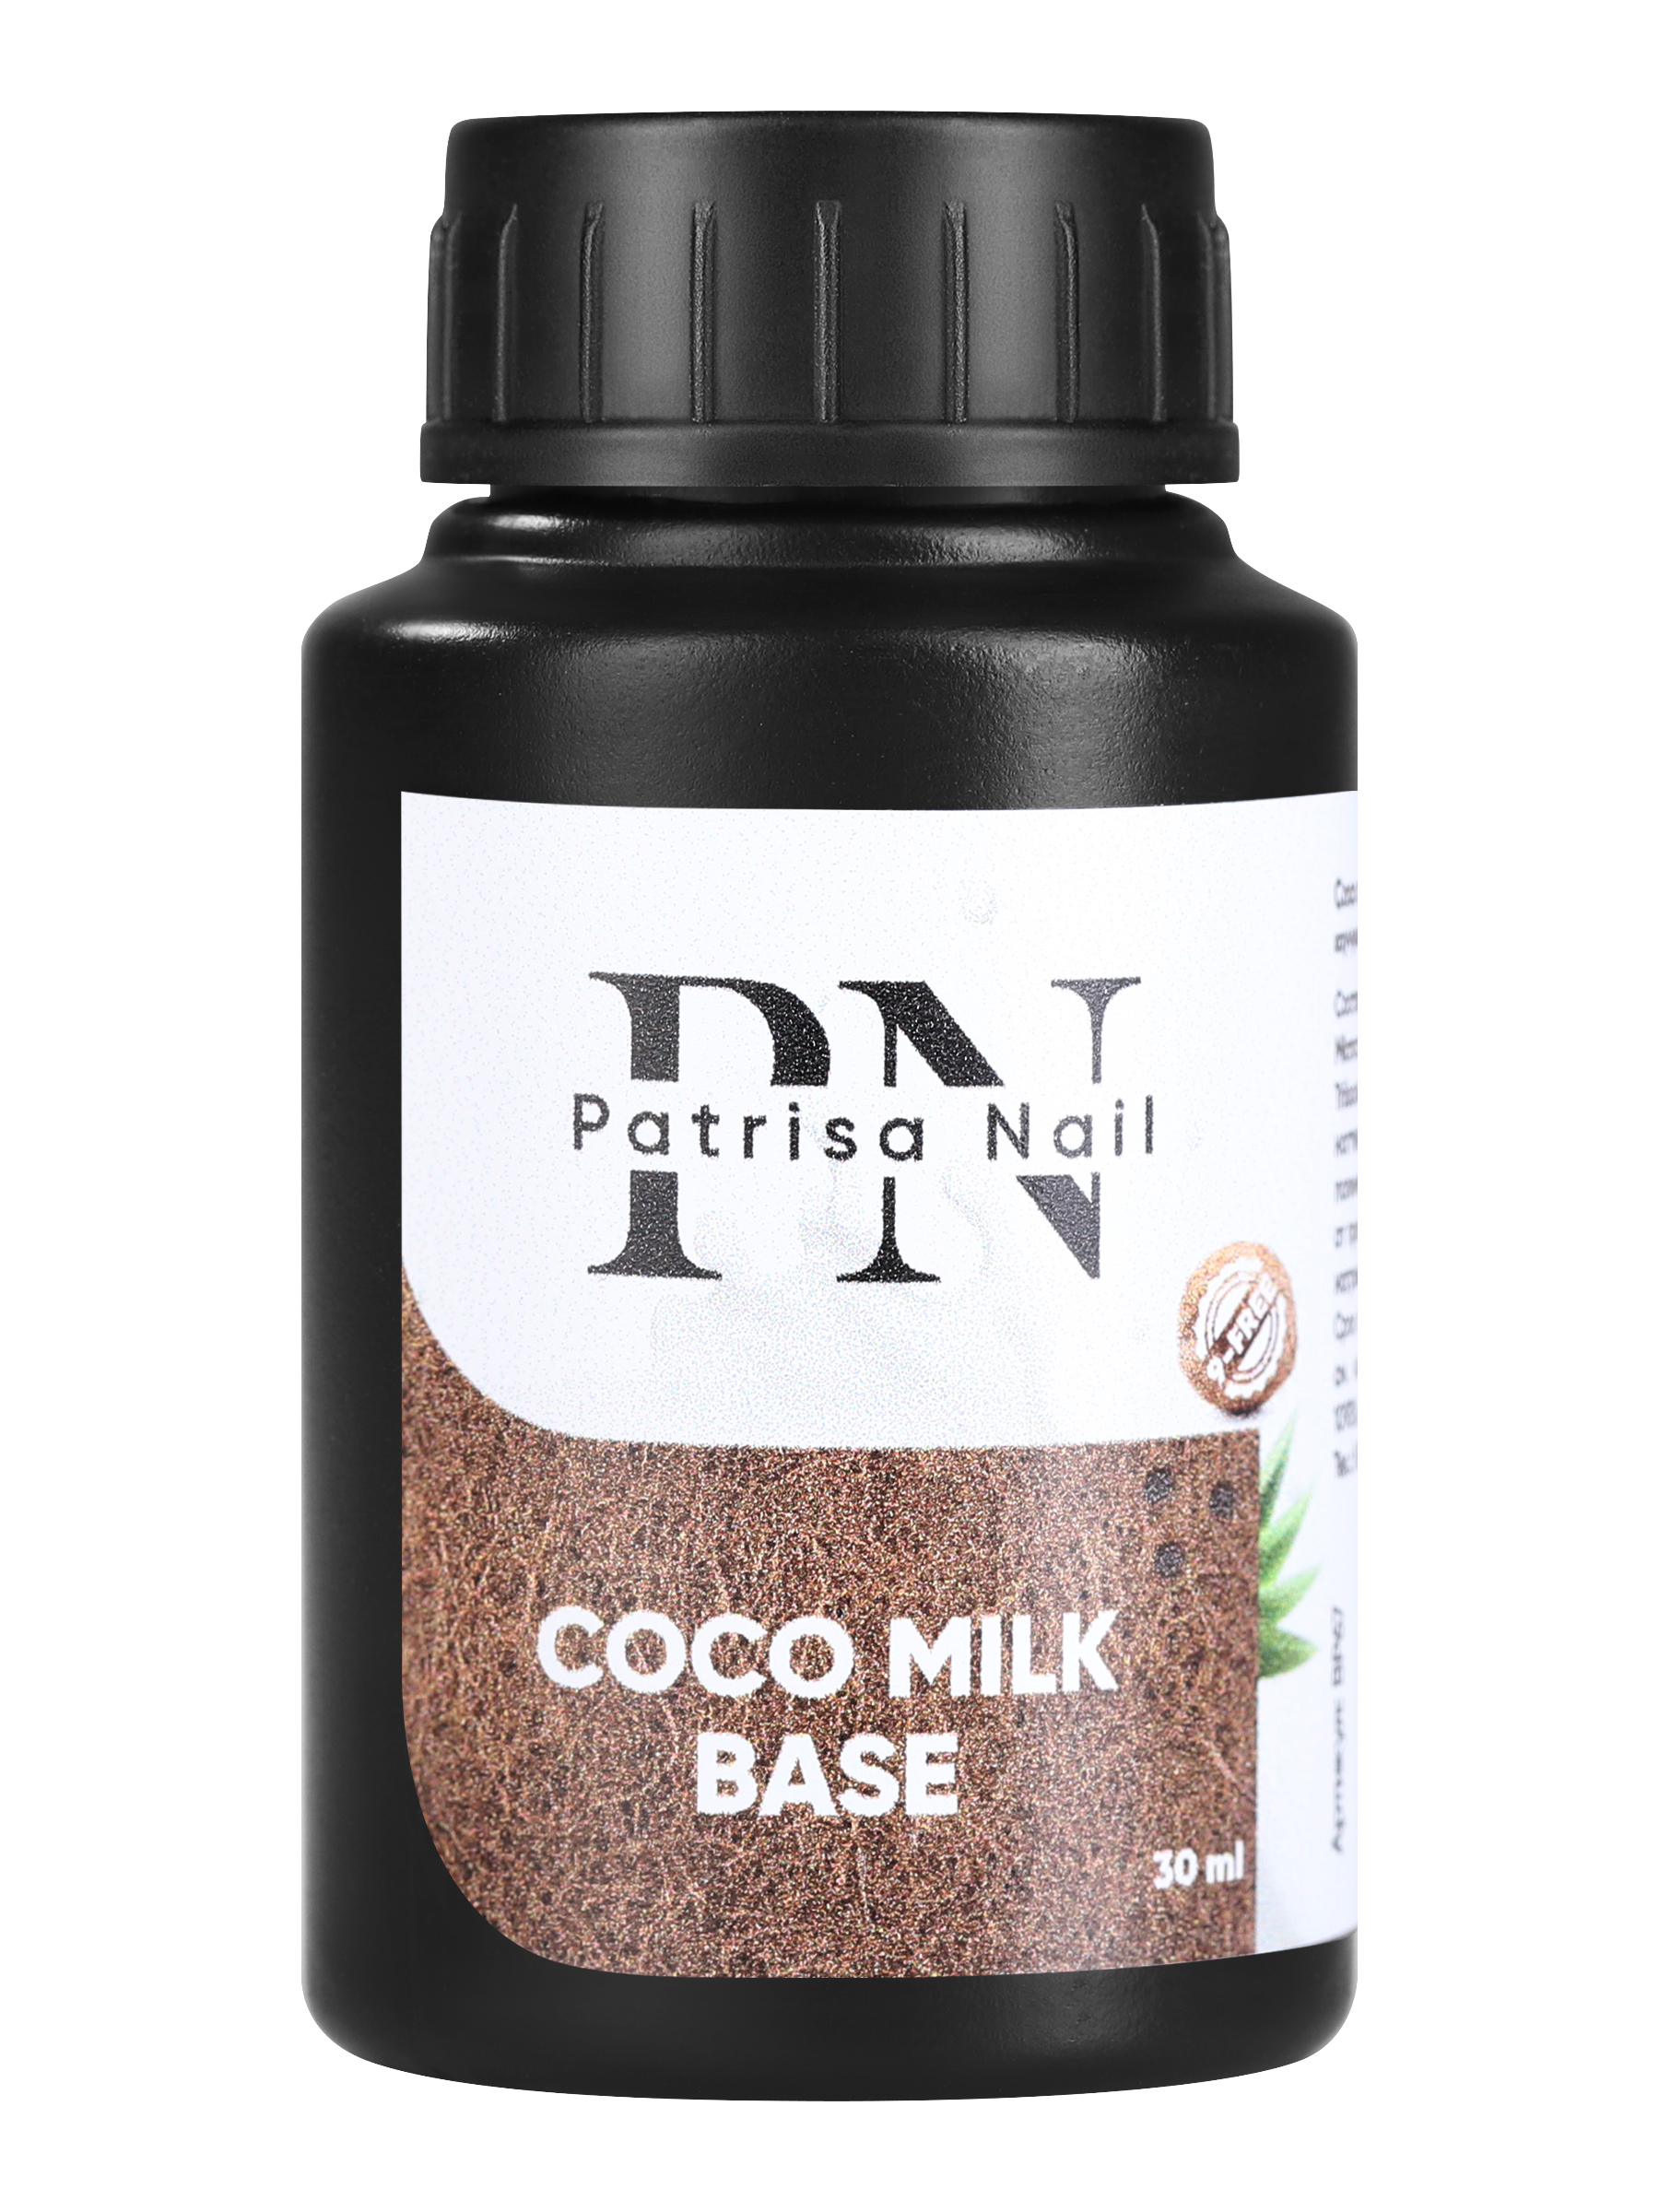 База для гель-лака Patrisa Nail Coco milk base камуфлирующая каучуковая молочная, 30 мл база камуфлирующая lovely base touch 03 12 мл